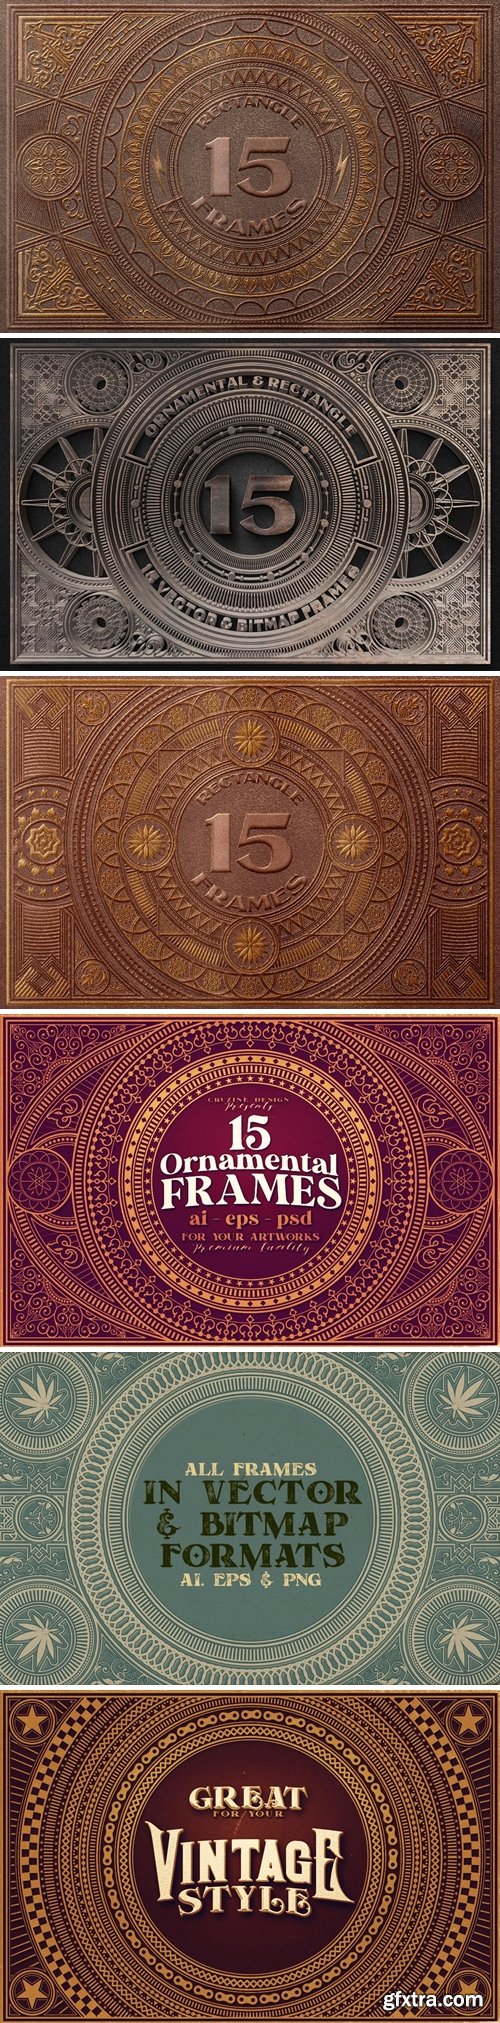 15 Rectangle & Ornamental Frames